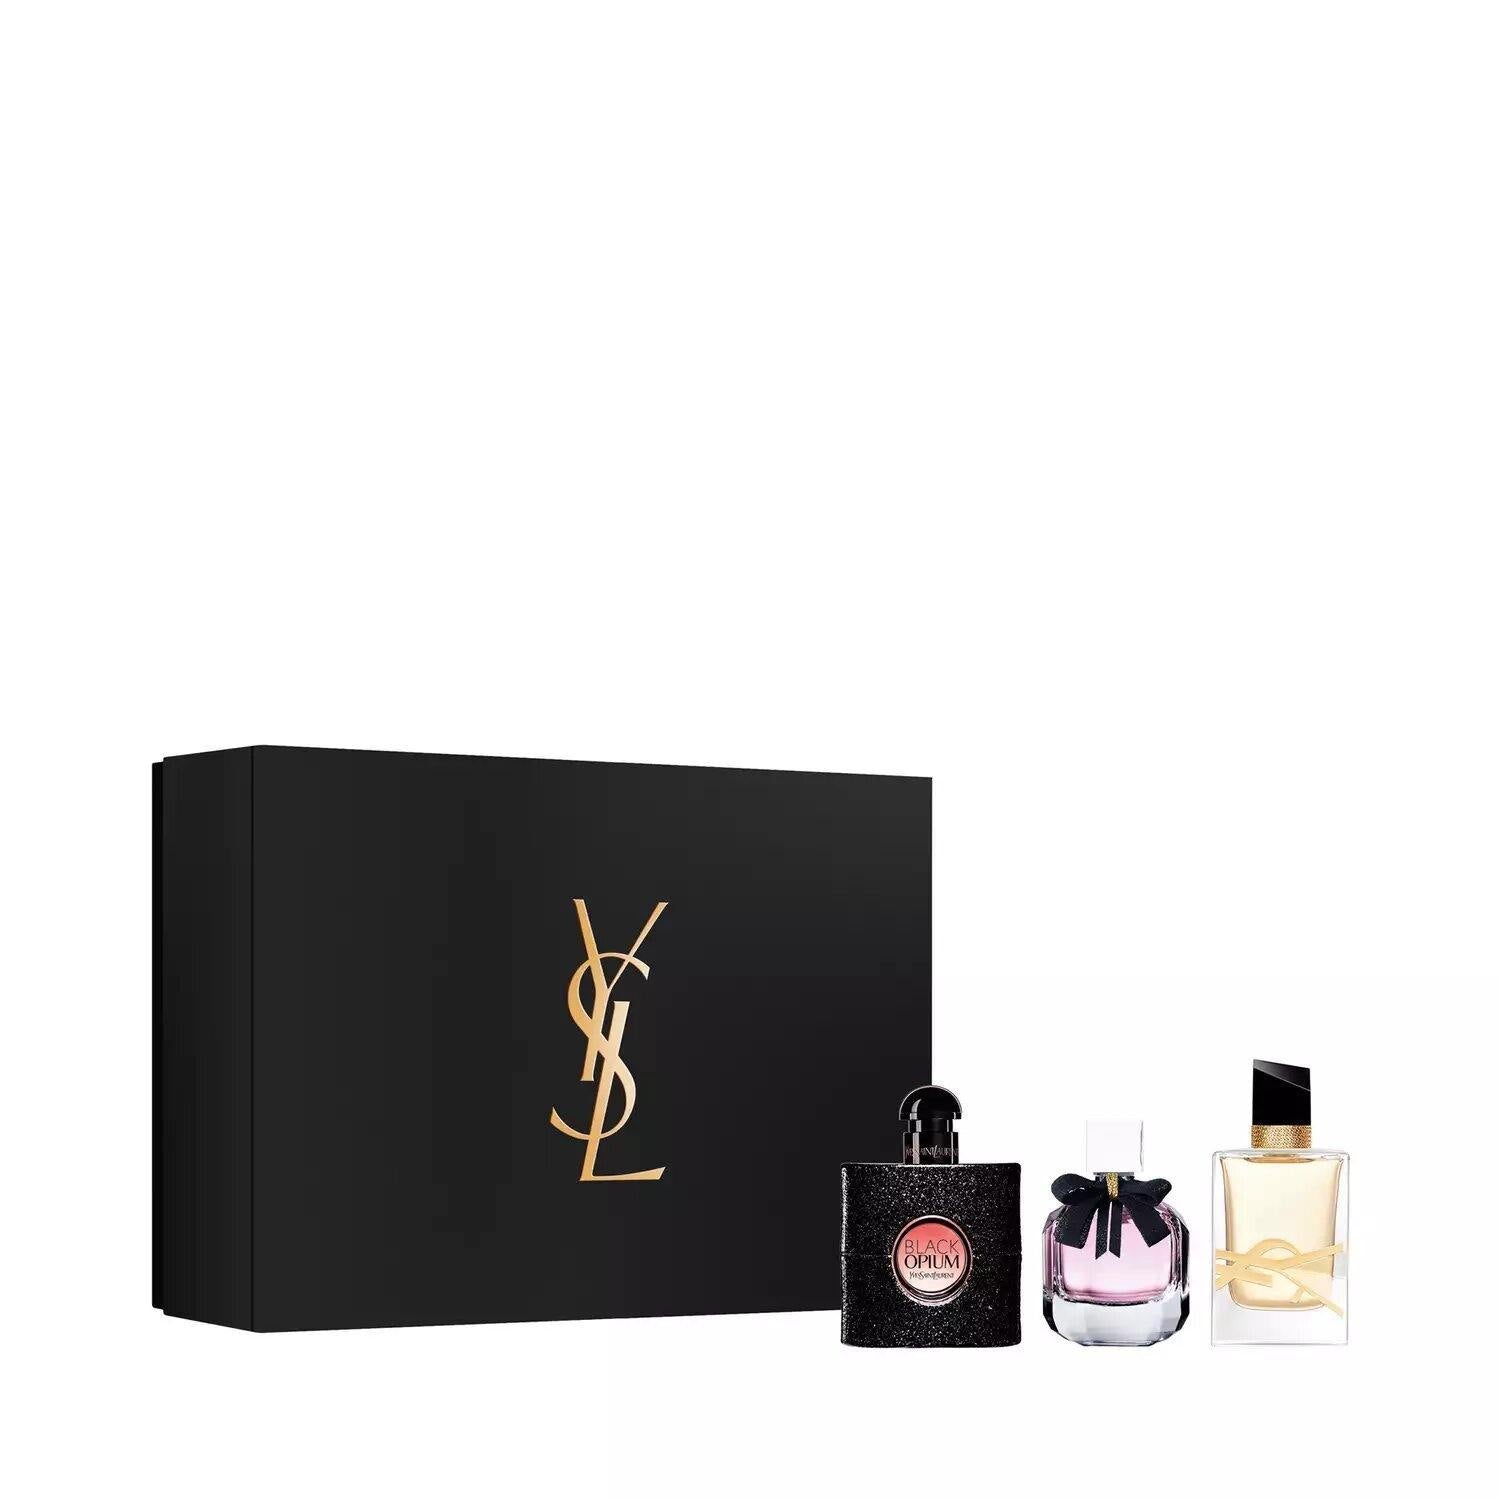 Yves Saint Laurent 3 in 1 Gift Set - DivineScent